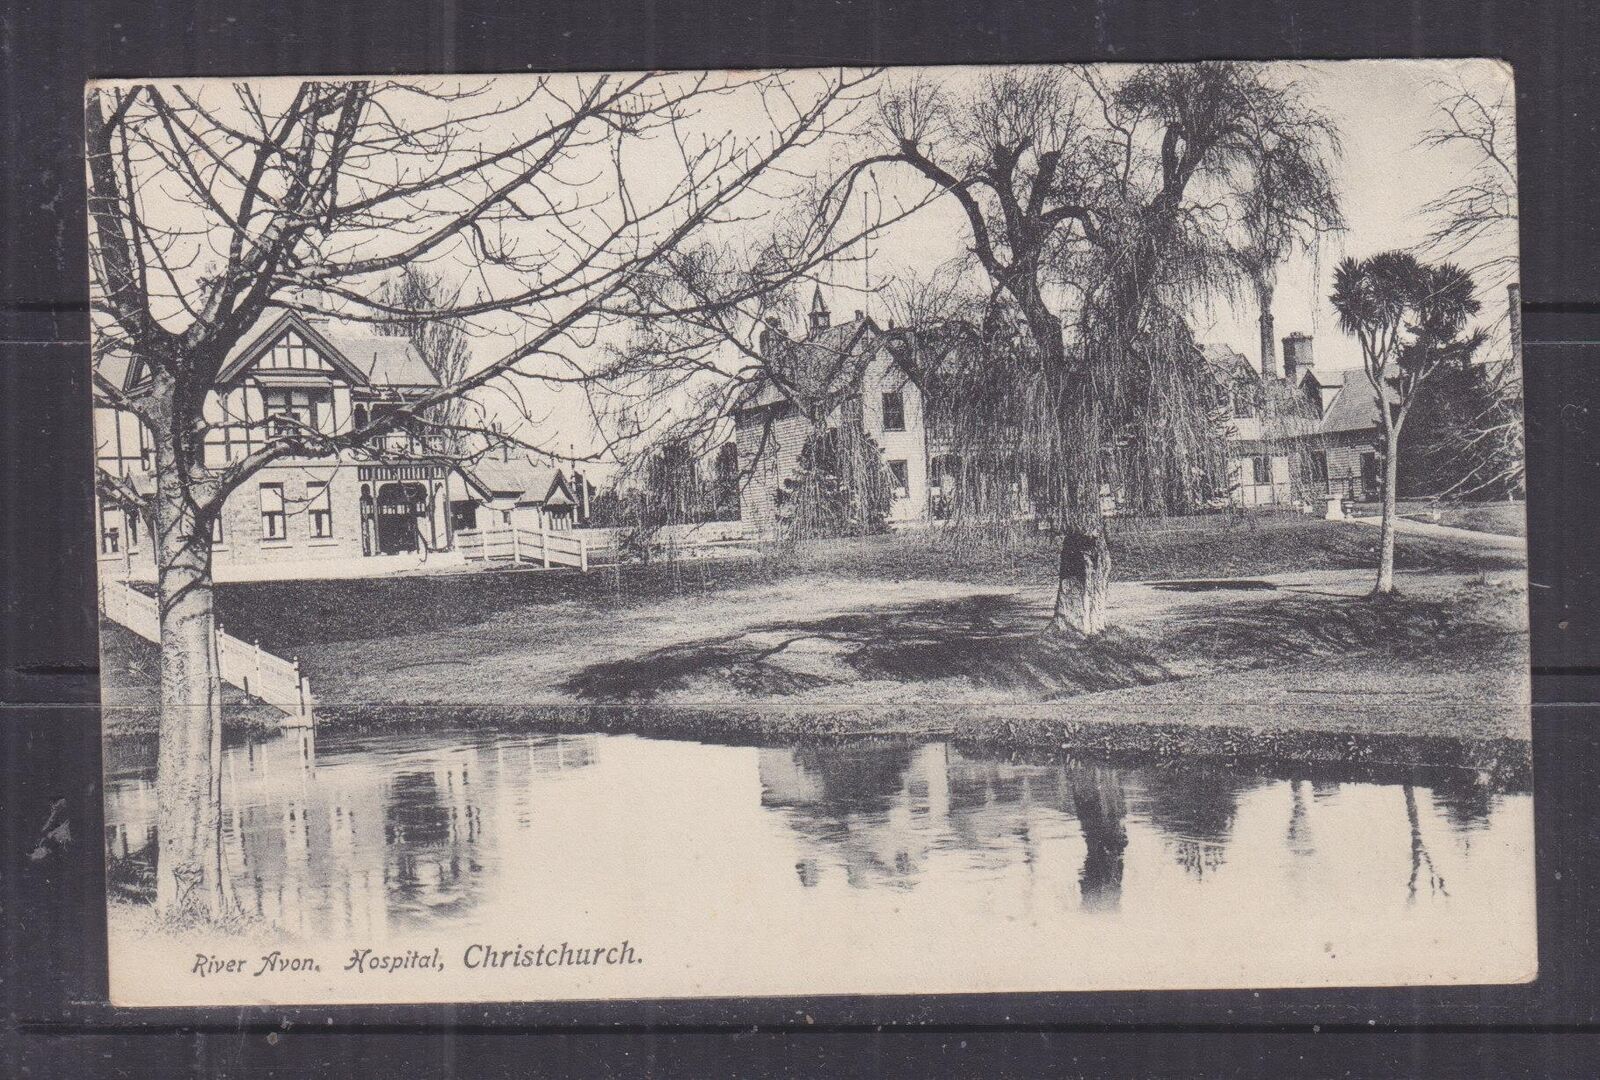 NEW ZEALAND, CHRISTCHURCH, HOSPITAL, RIVER AVON, 1908 ppc., used.